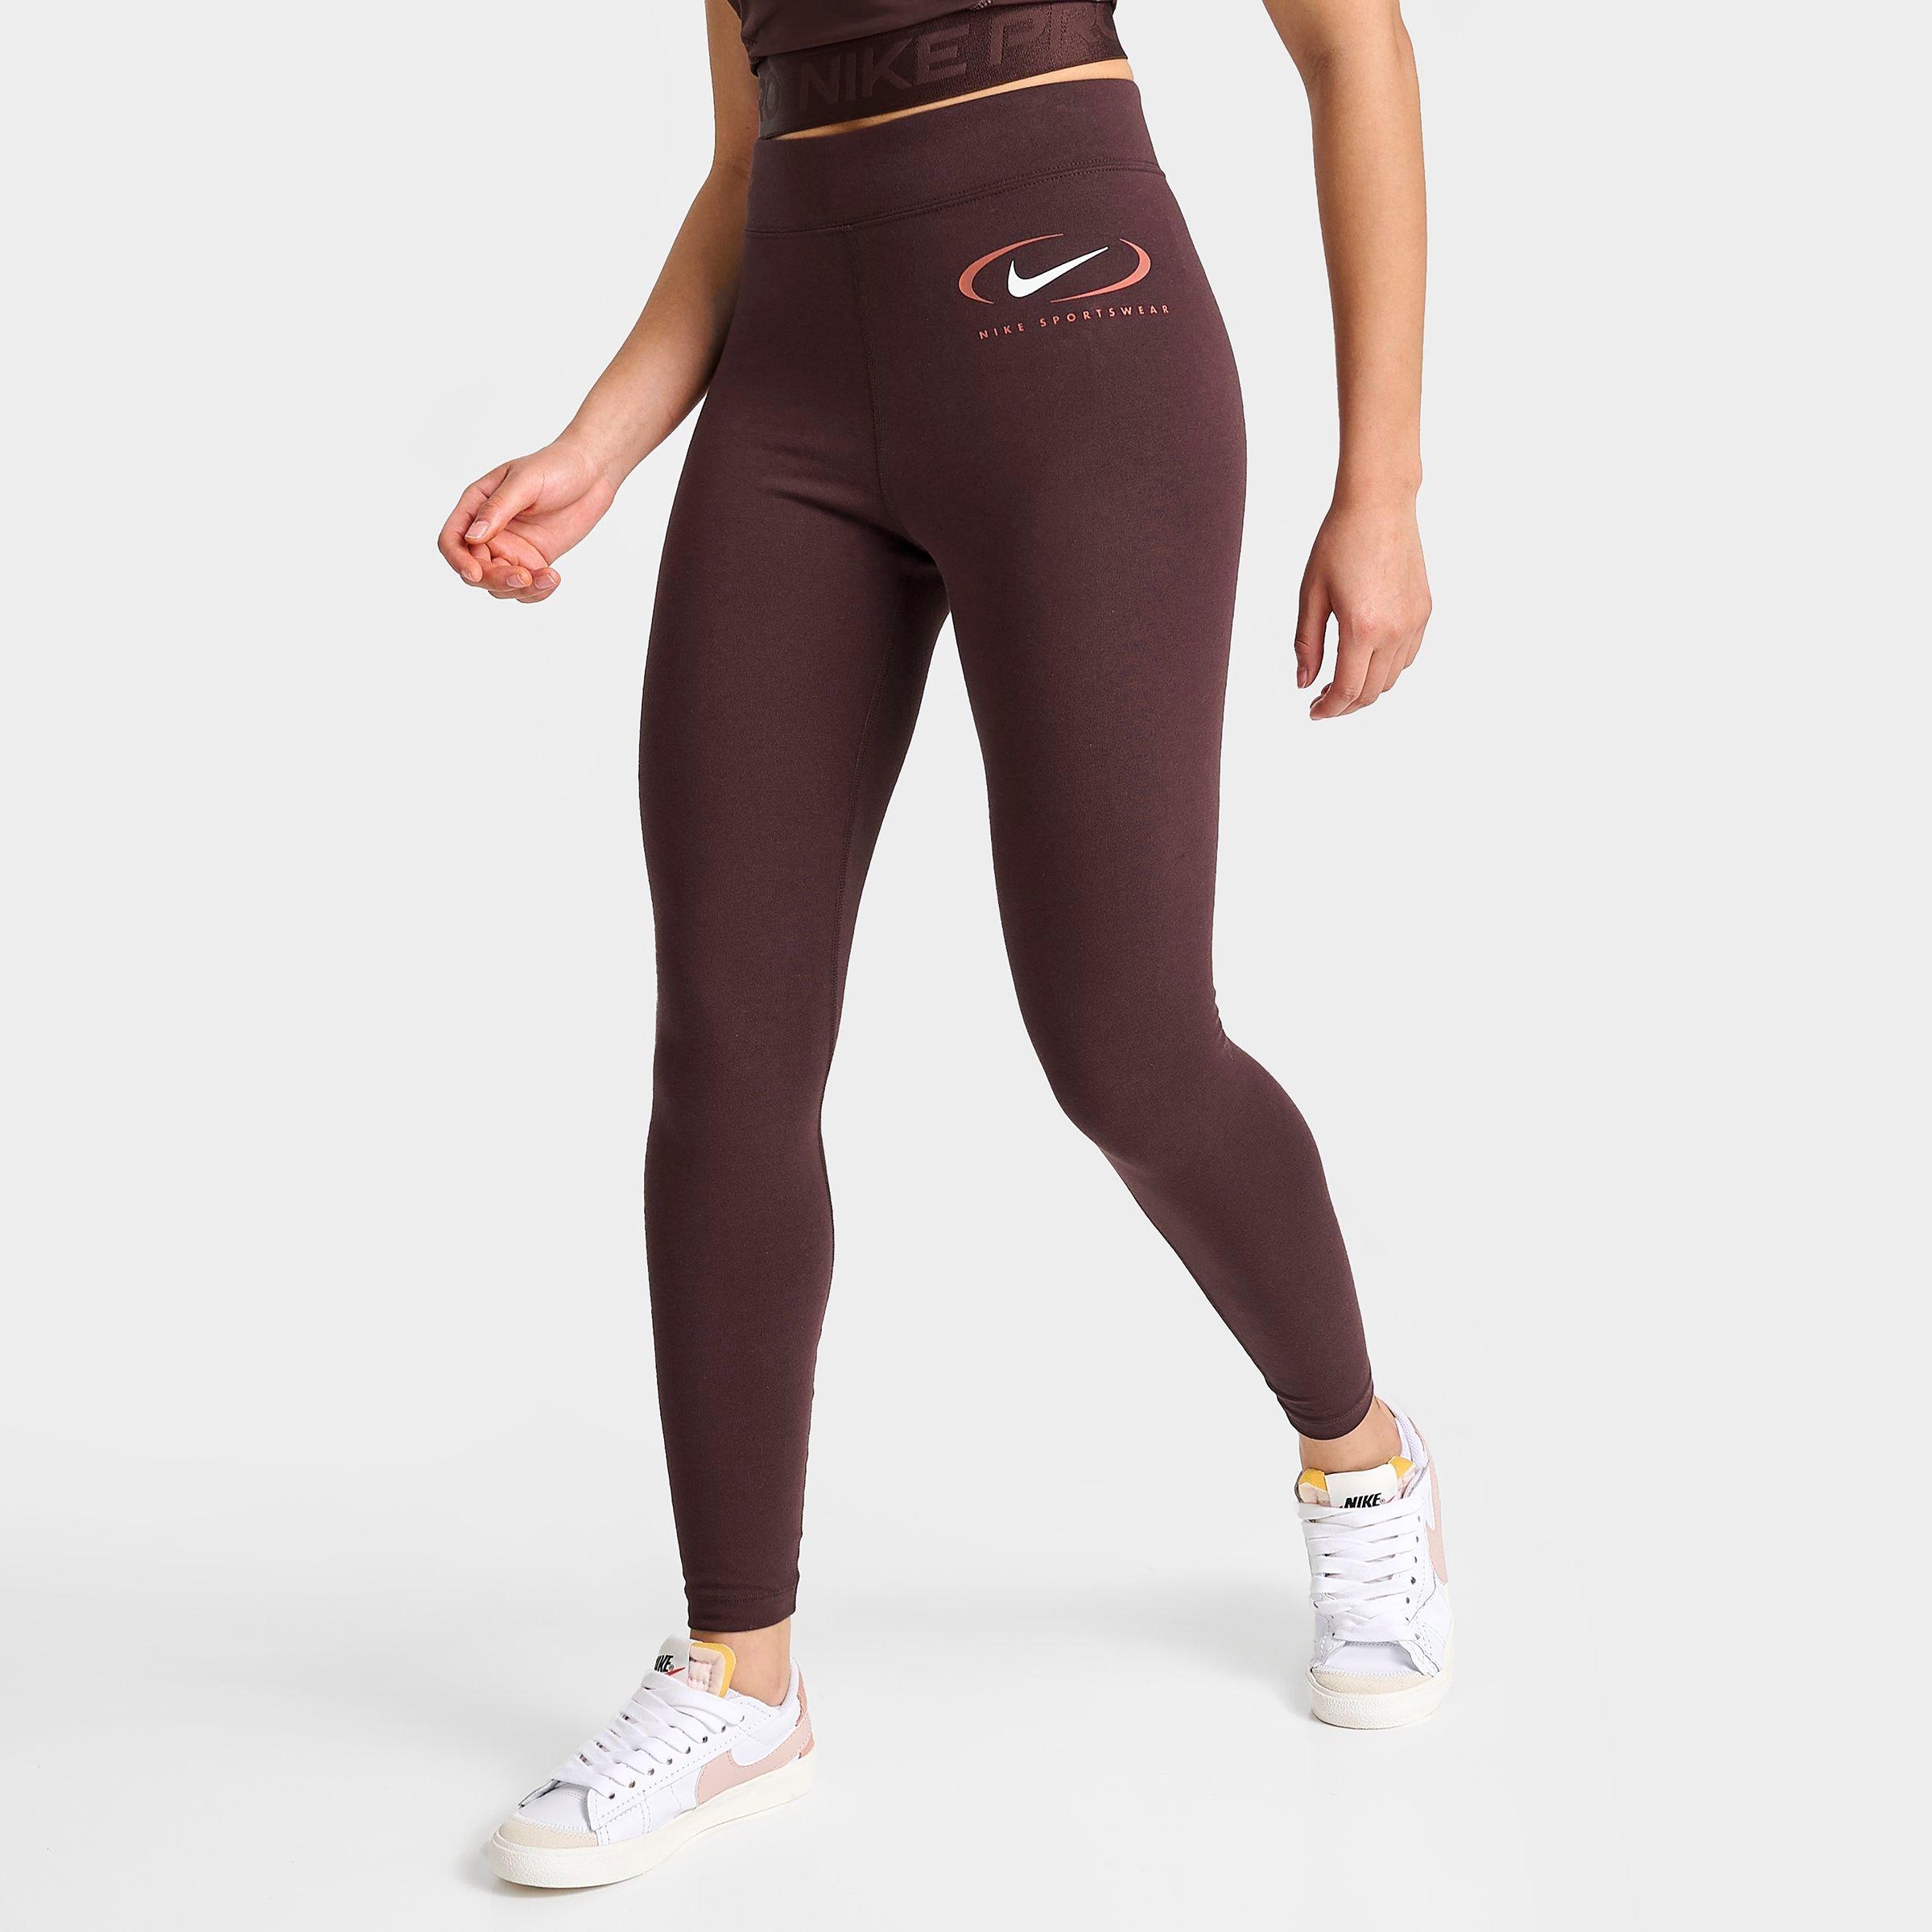  Nike Pro Hyperwarm Tights Burgundy Crush/Black, Size M